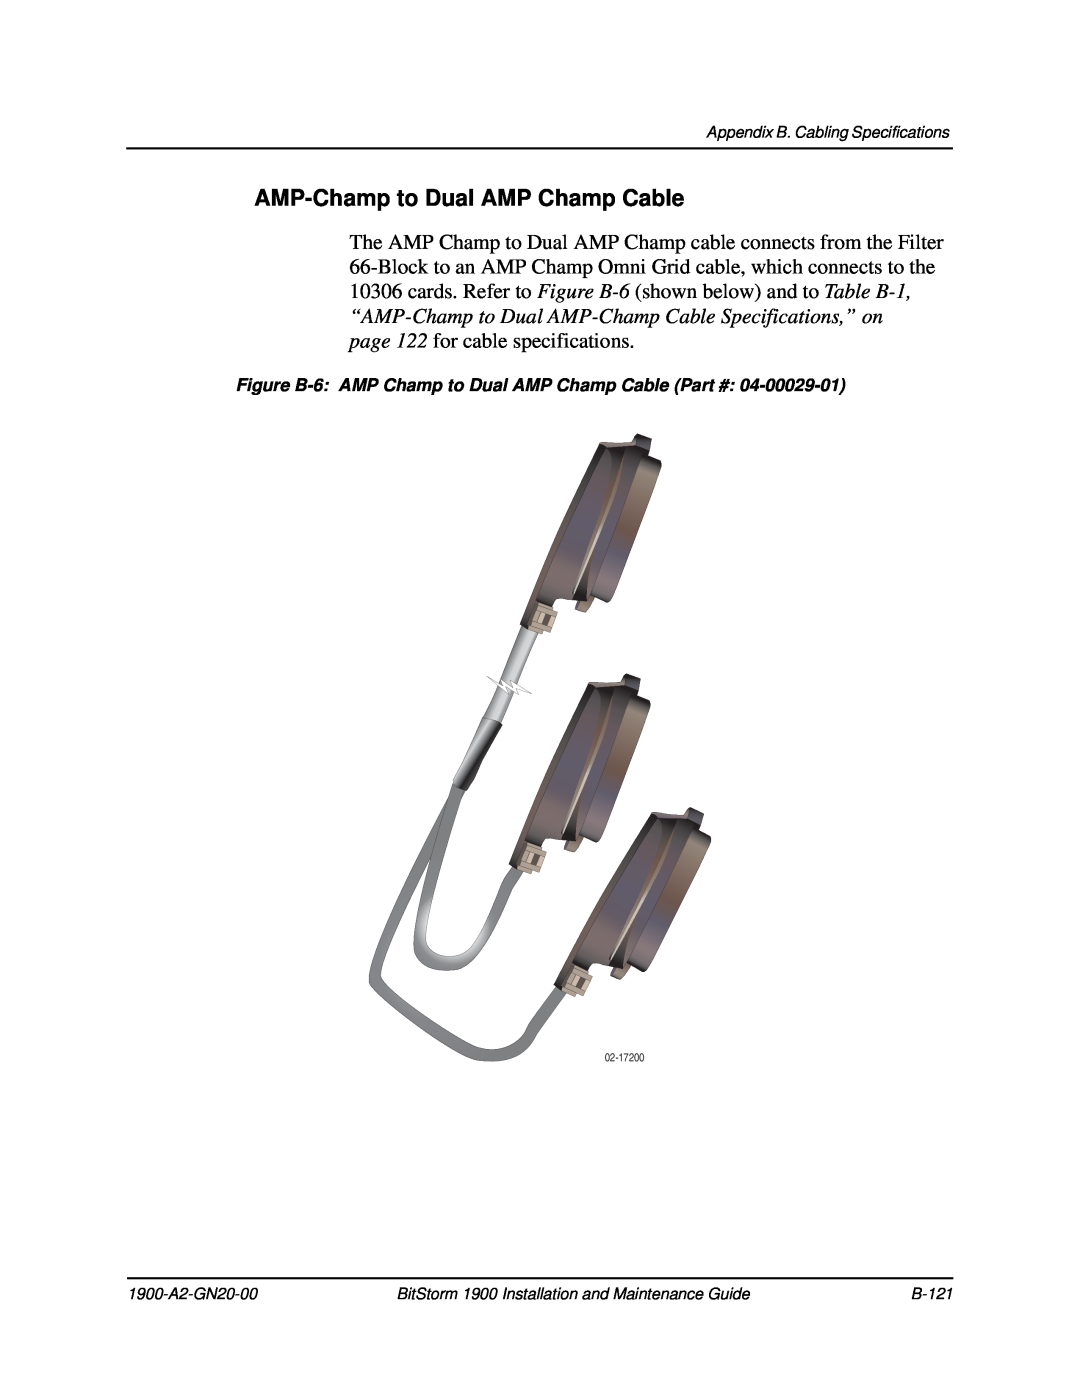 Paradyne 1900 manual AMP-Champ to Dual AMP Champ Cable, Figure B-6 AMP Champ to Dual AMP Champ Cable 